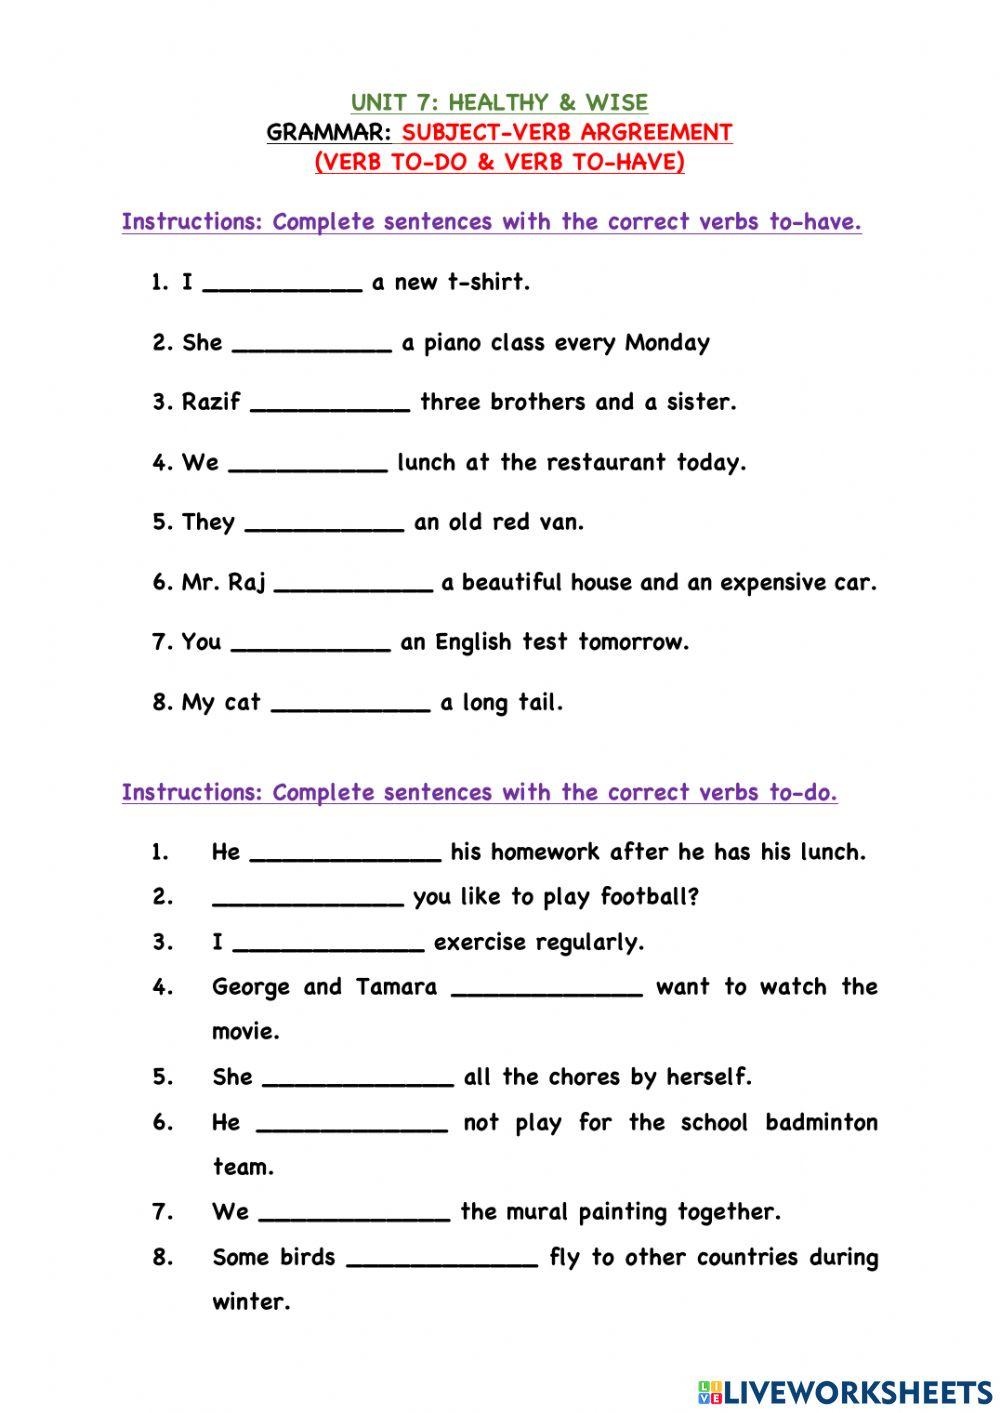 Unit 7: Grammar- Subject-Verb Agreement-2